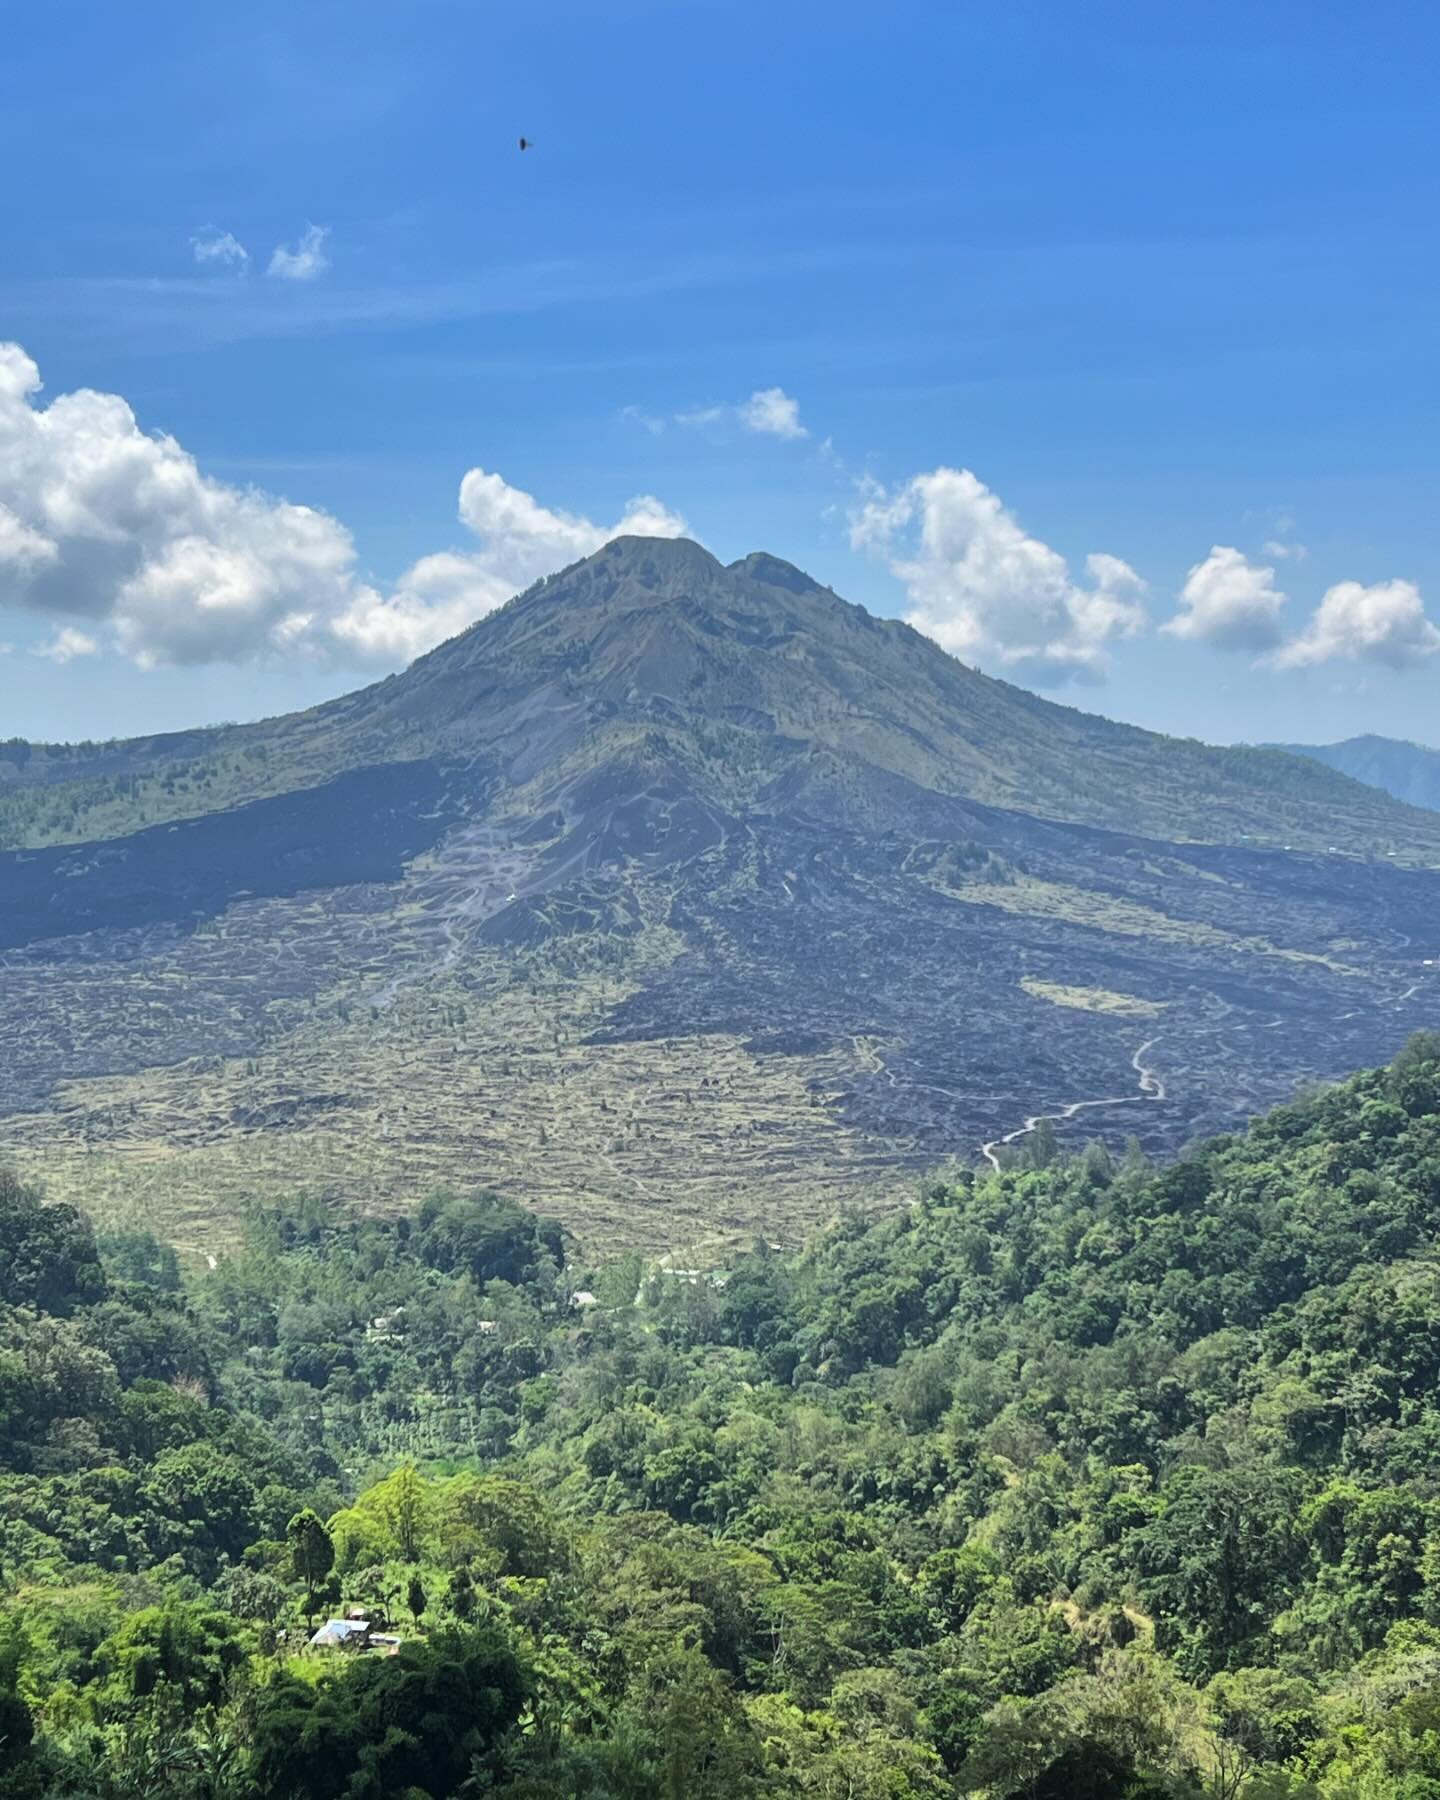 Bali&rsquo;s Mt Batur in her full splendour today from the highland town of Kintamani 🌋🌋❤️❤️ 

#mtbatur #mountbatur #mtbaturbali #mtbaturbali🌋 #kintamani #caldera #balivolcano #balivolcanotrekking